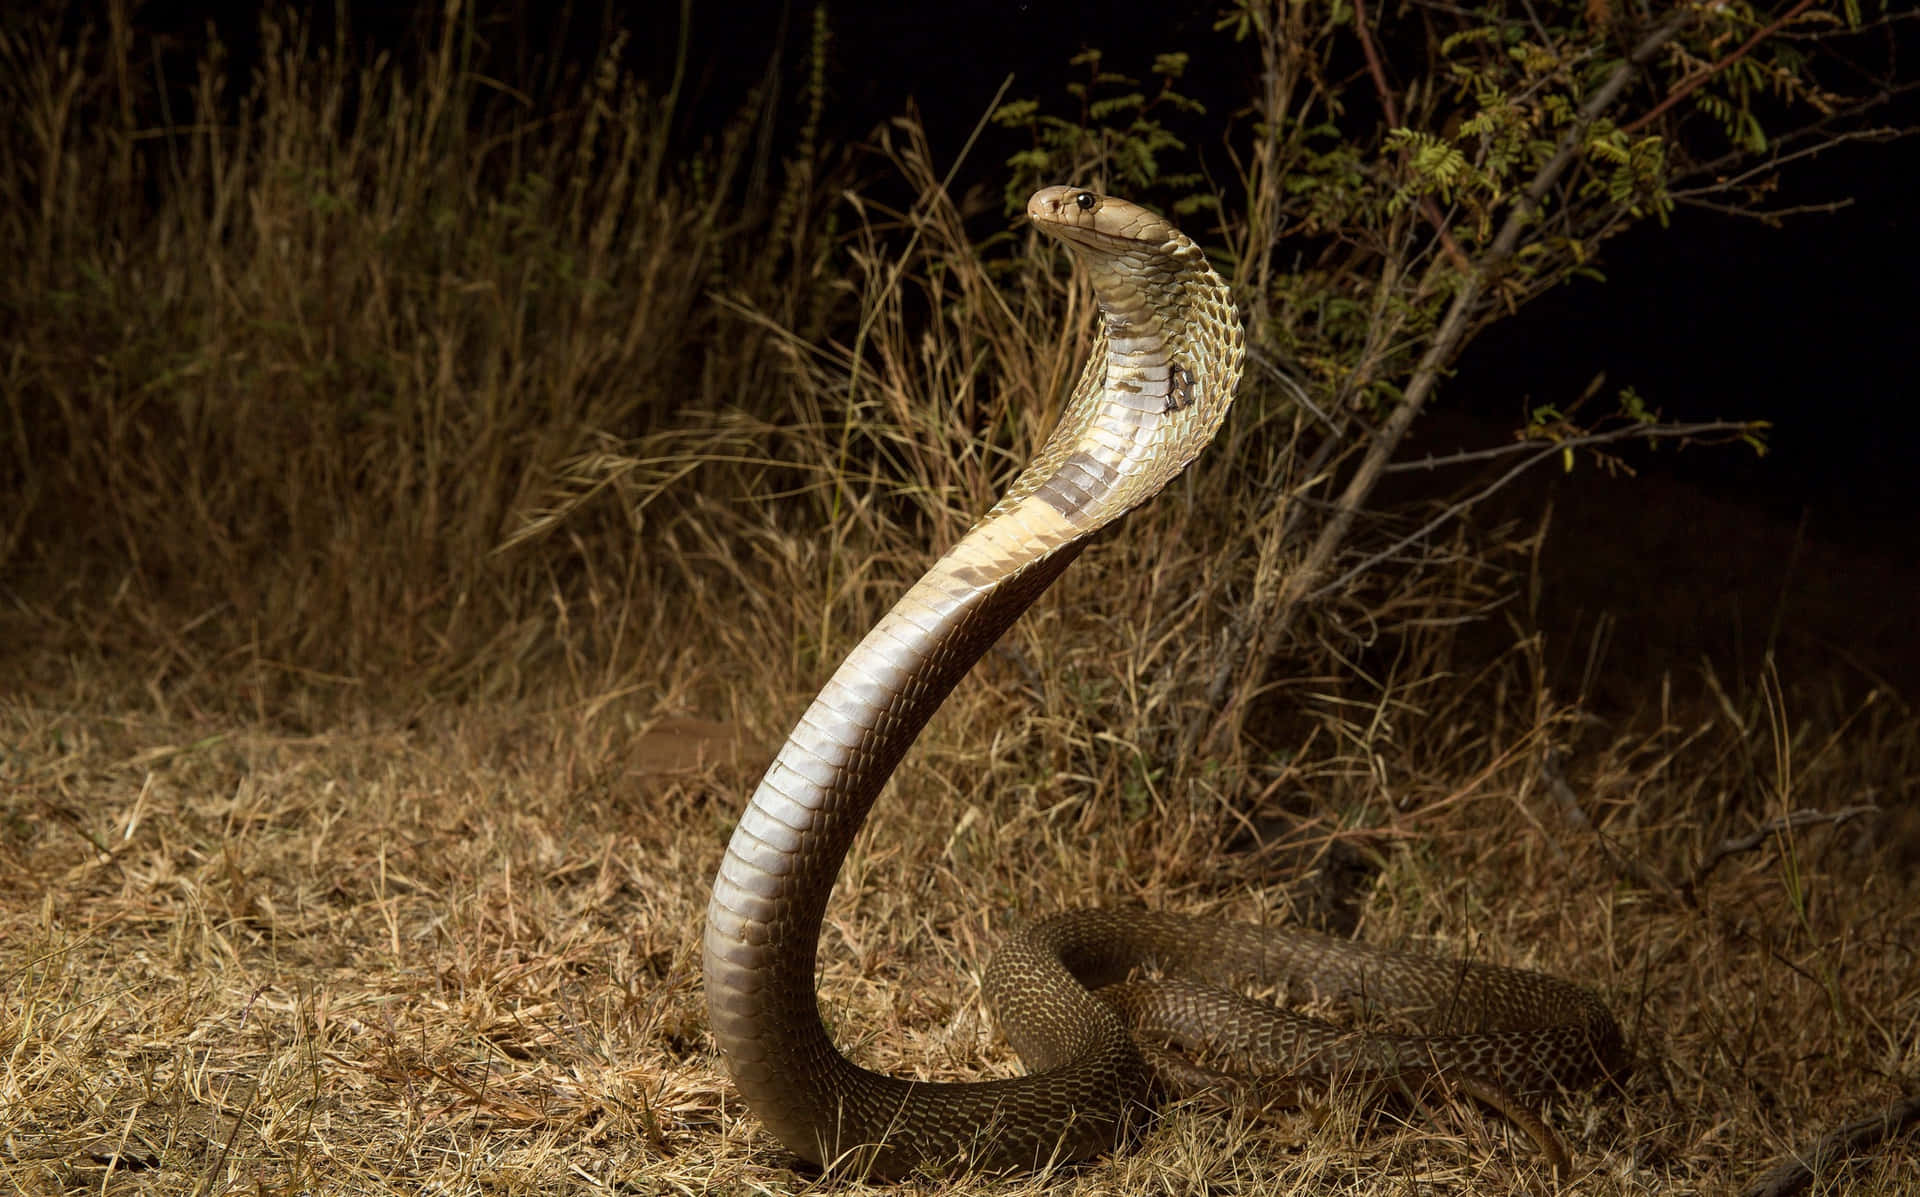 Close up of a King Cobra snake